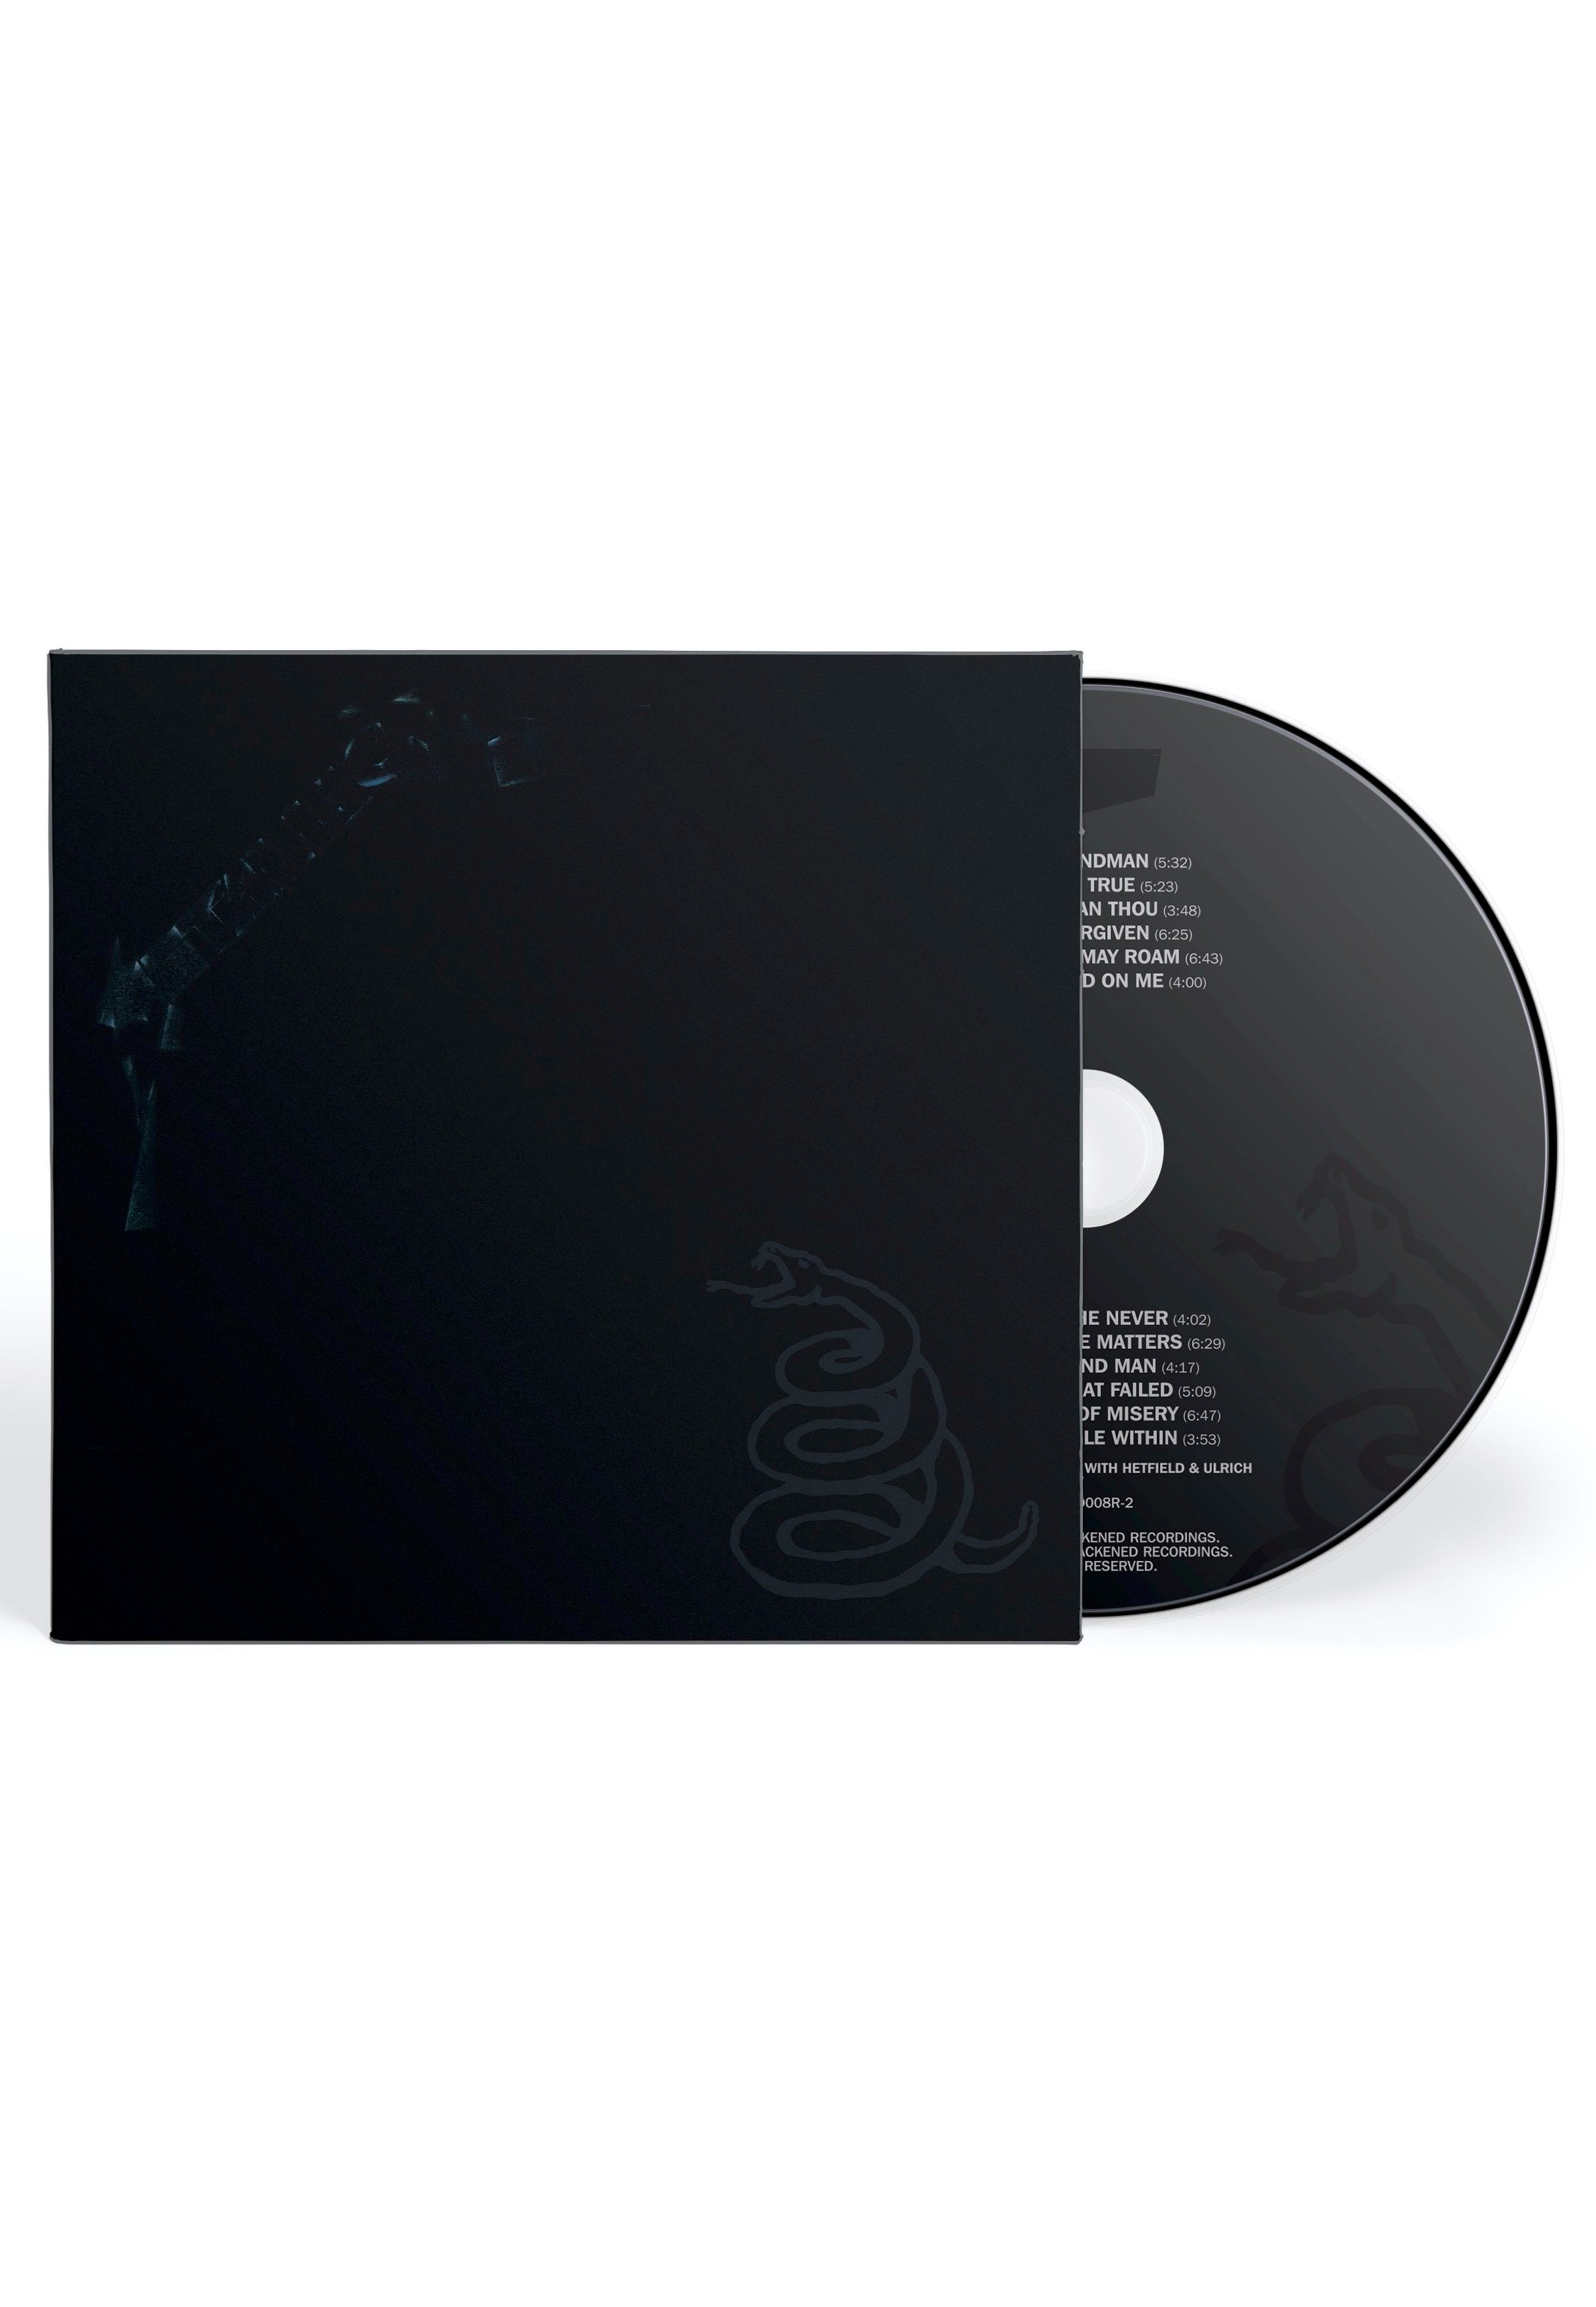 Metallica - Metallica (Remastered) - 3 CD Box